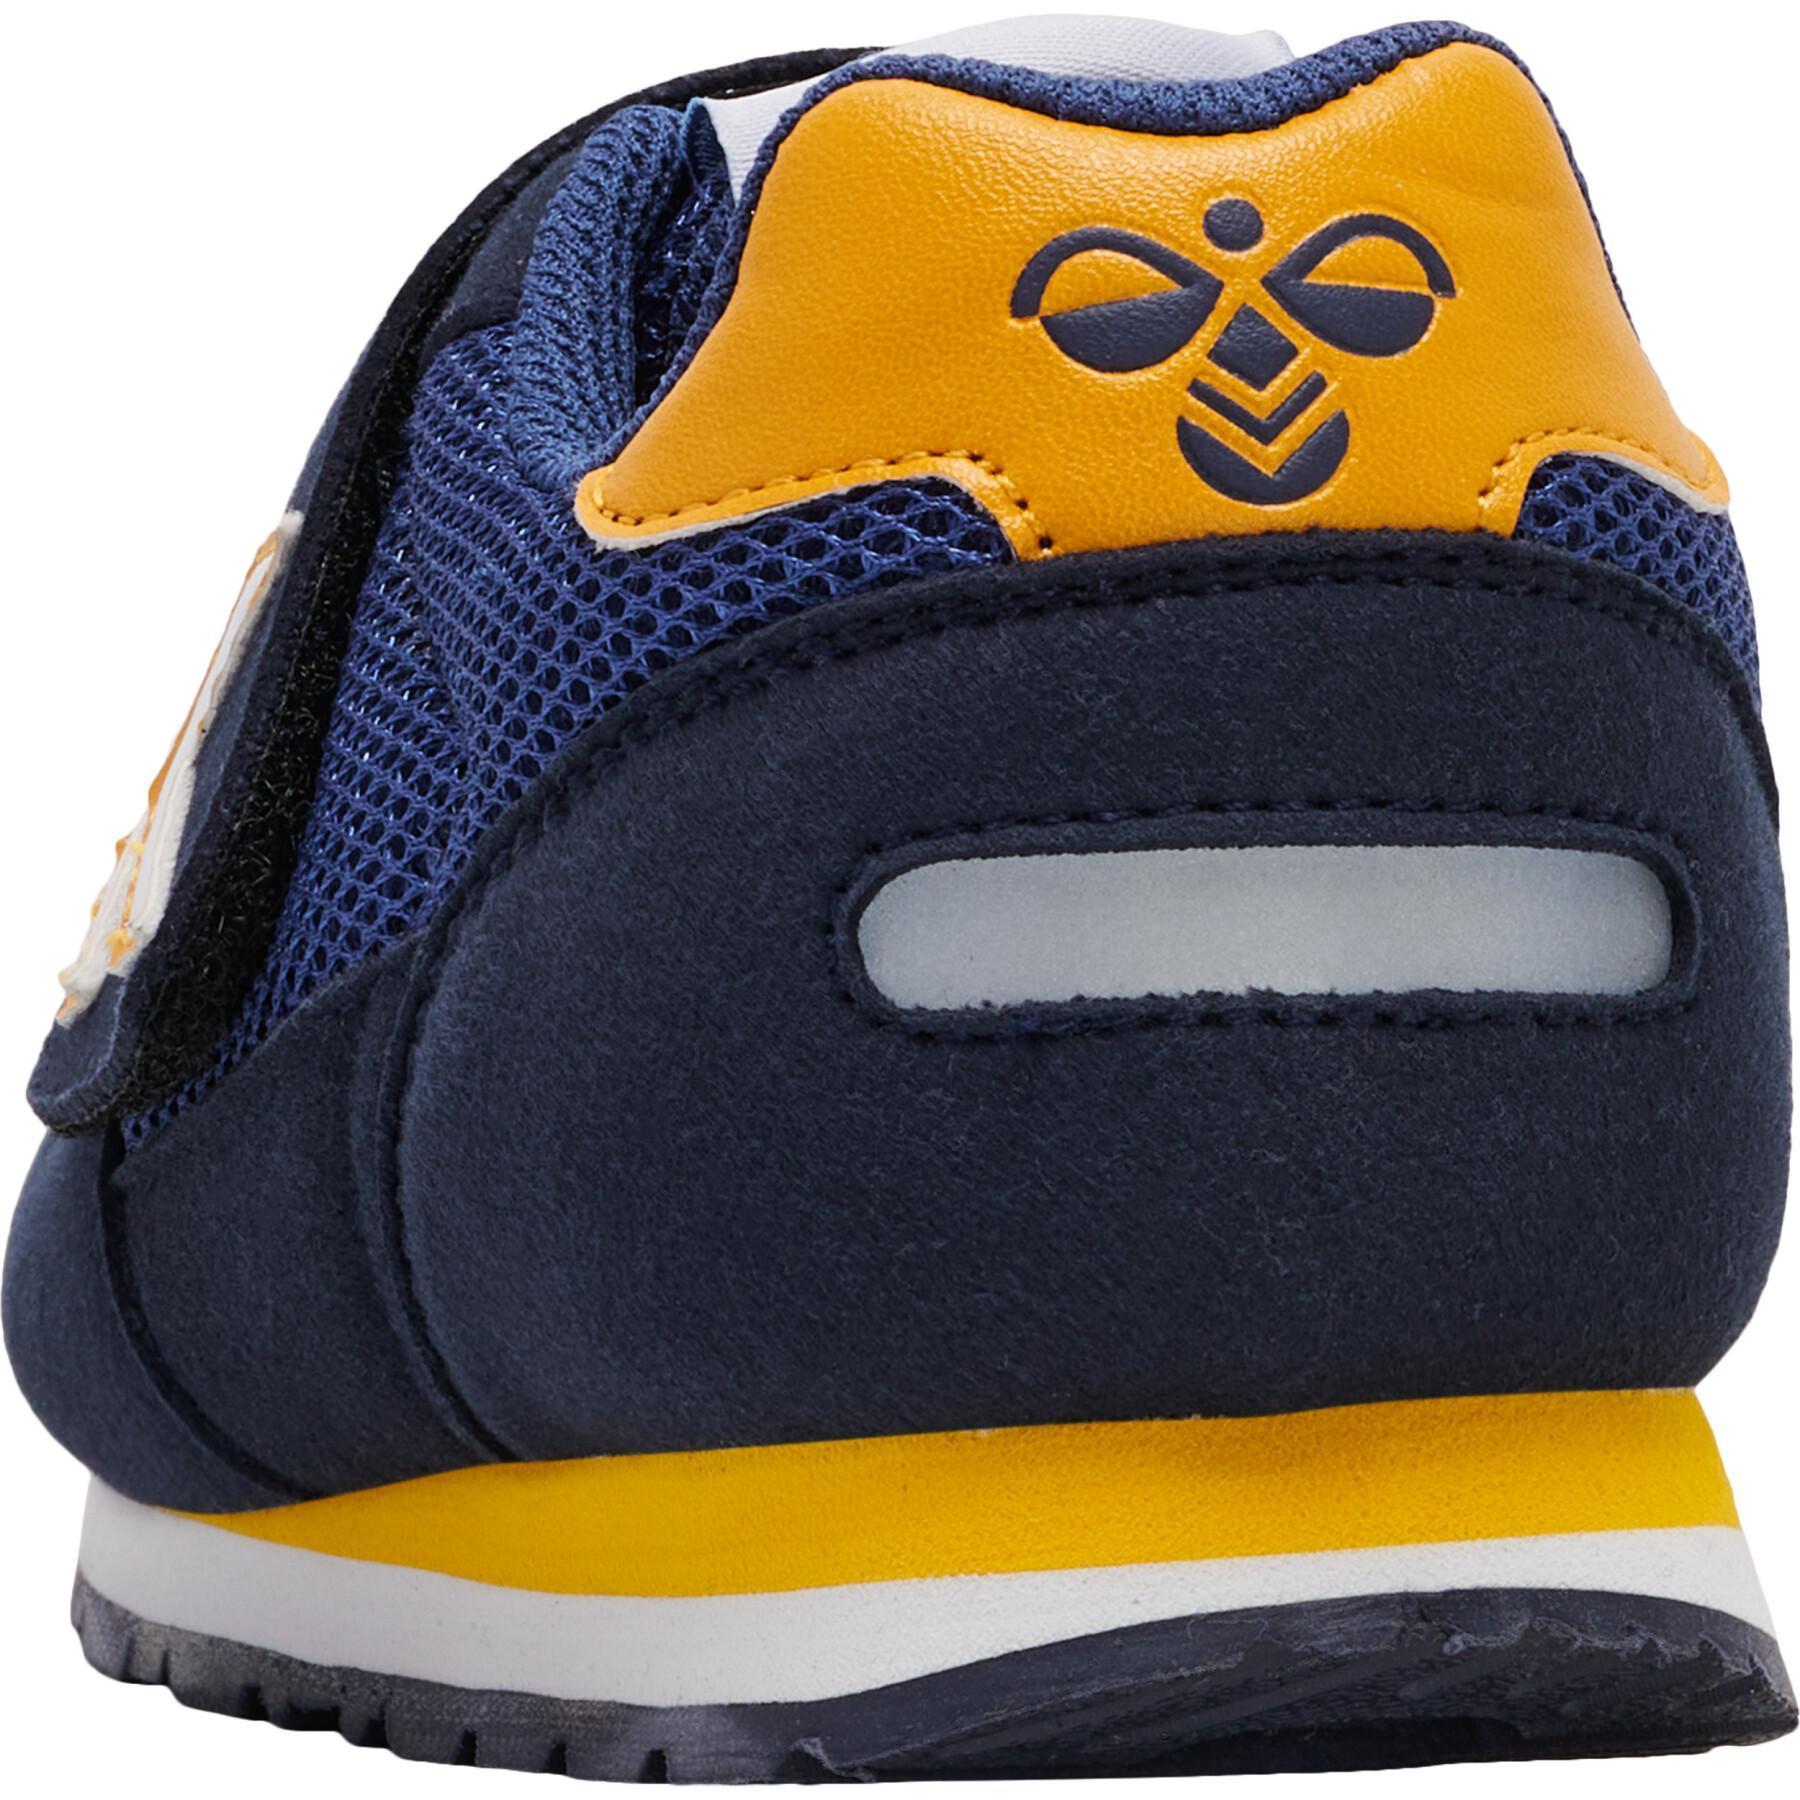 Velcro sneakers for kids Hummel Reflex